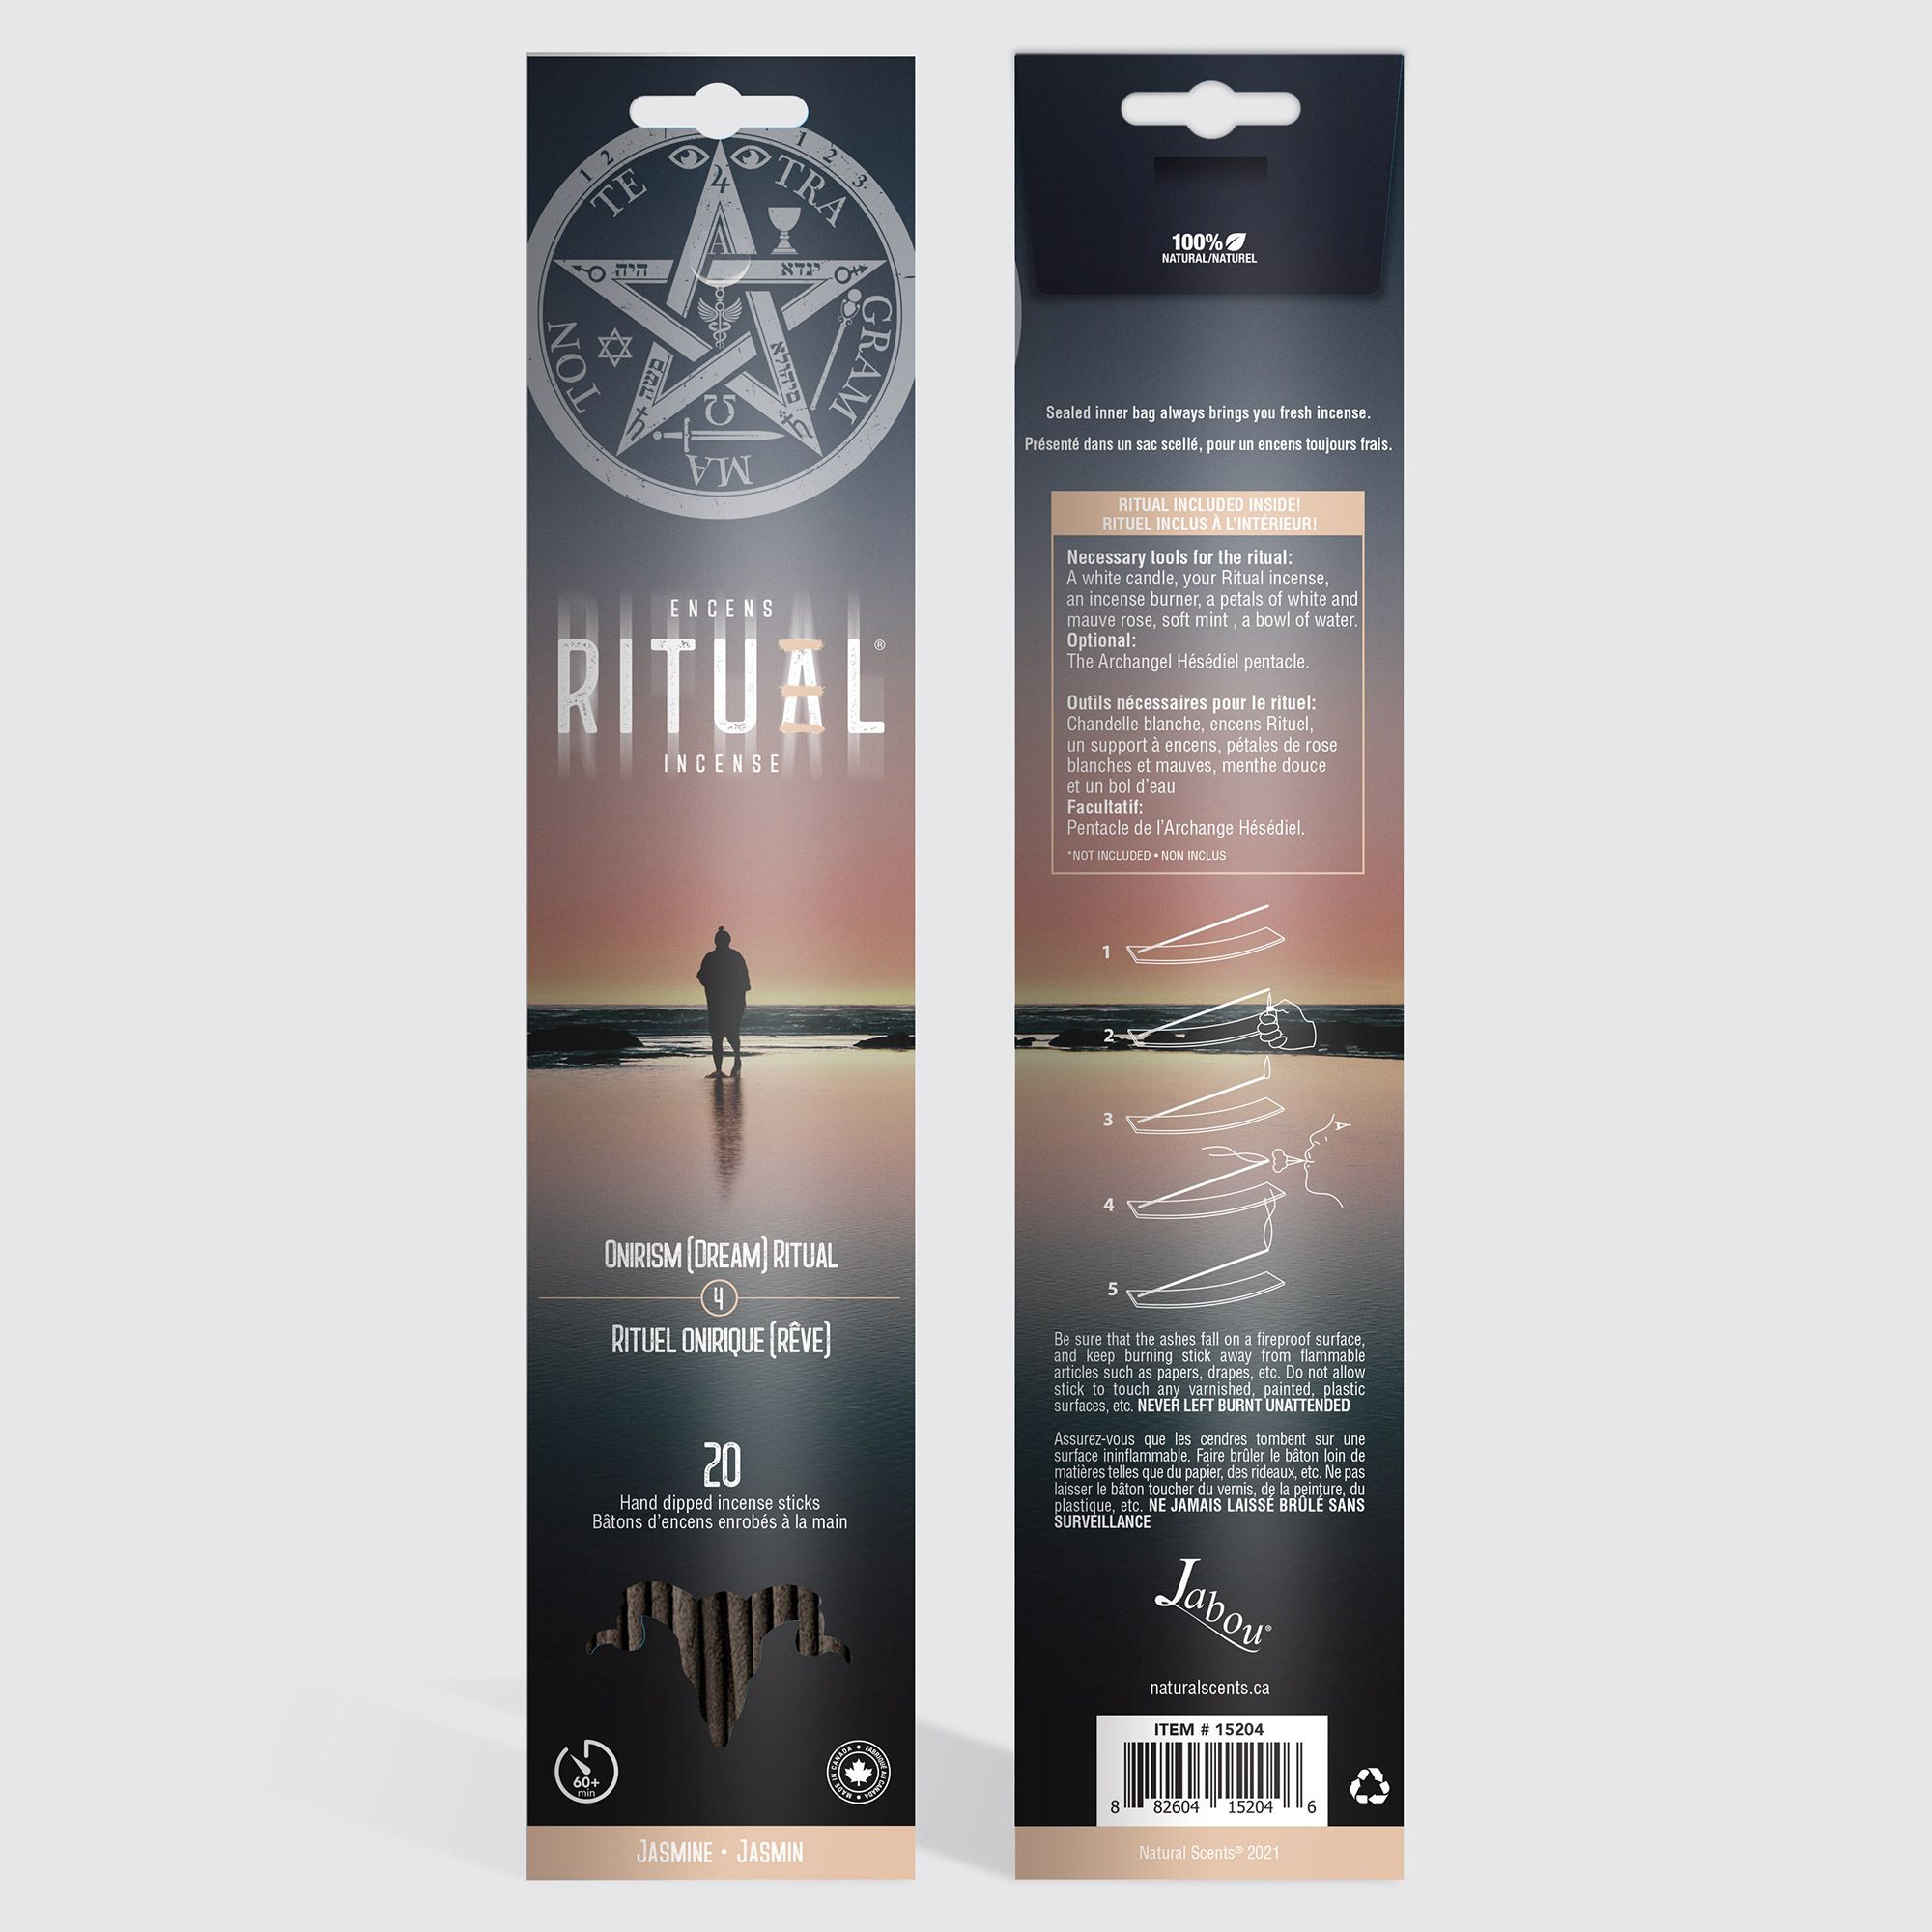 Onirism (Dream) Ritual Incense Sticks